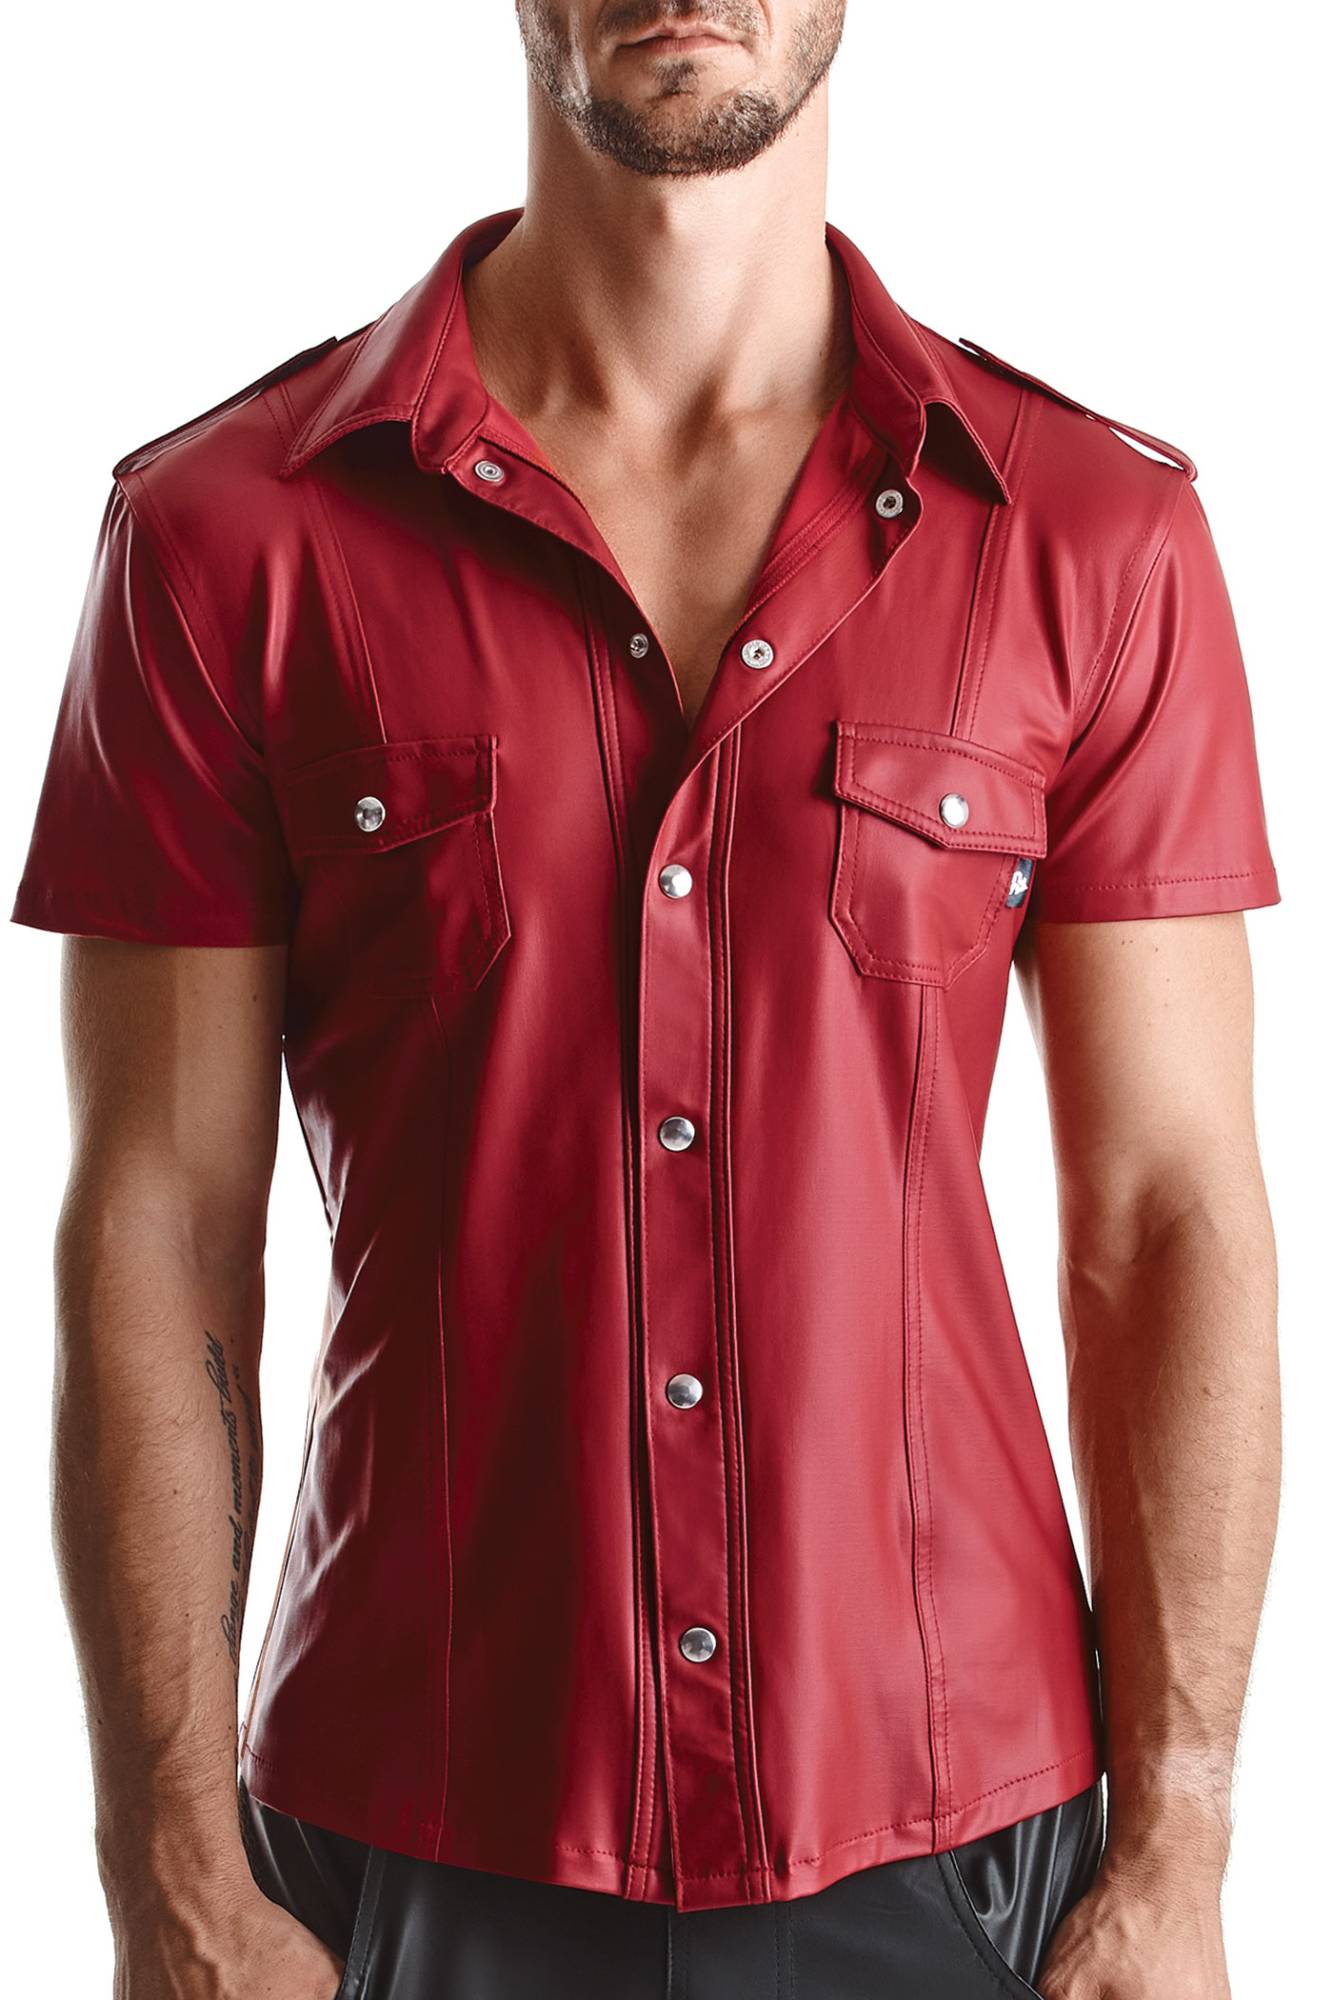 RMCarlo001 – red shirt – L